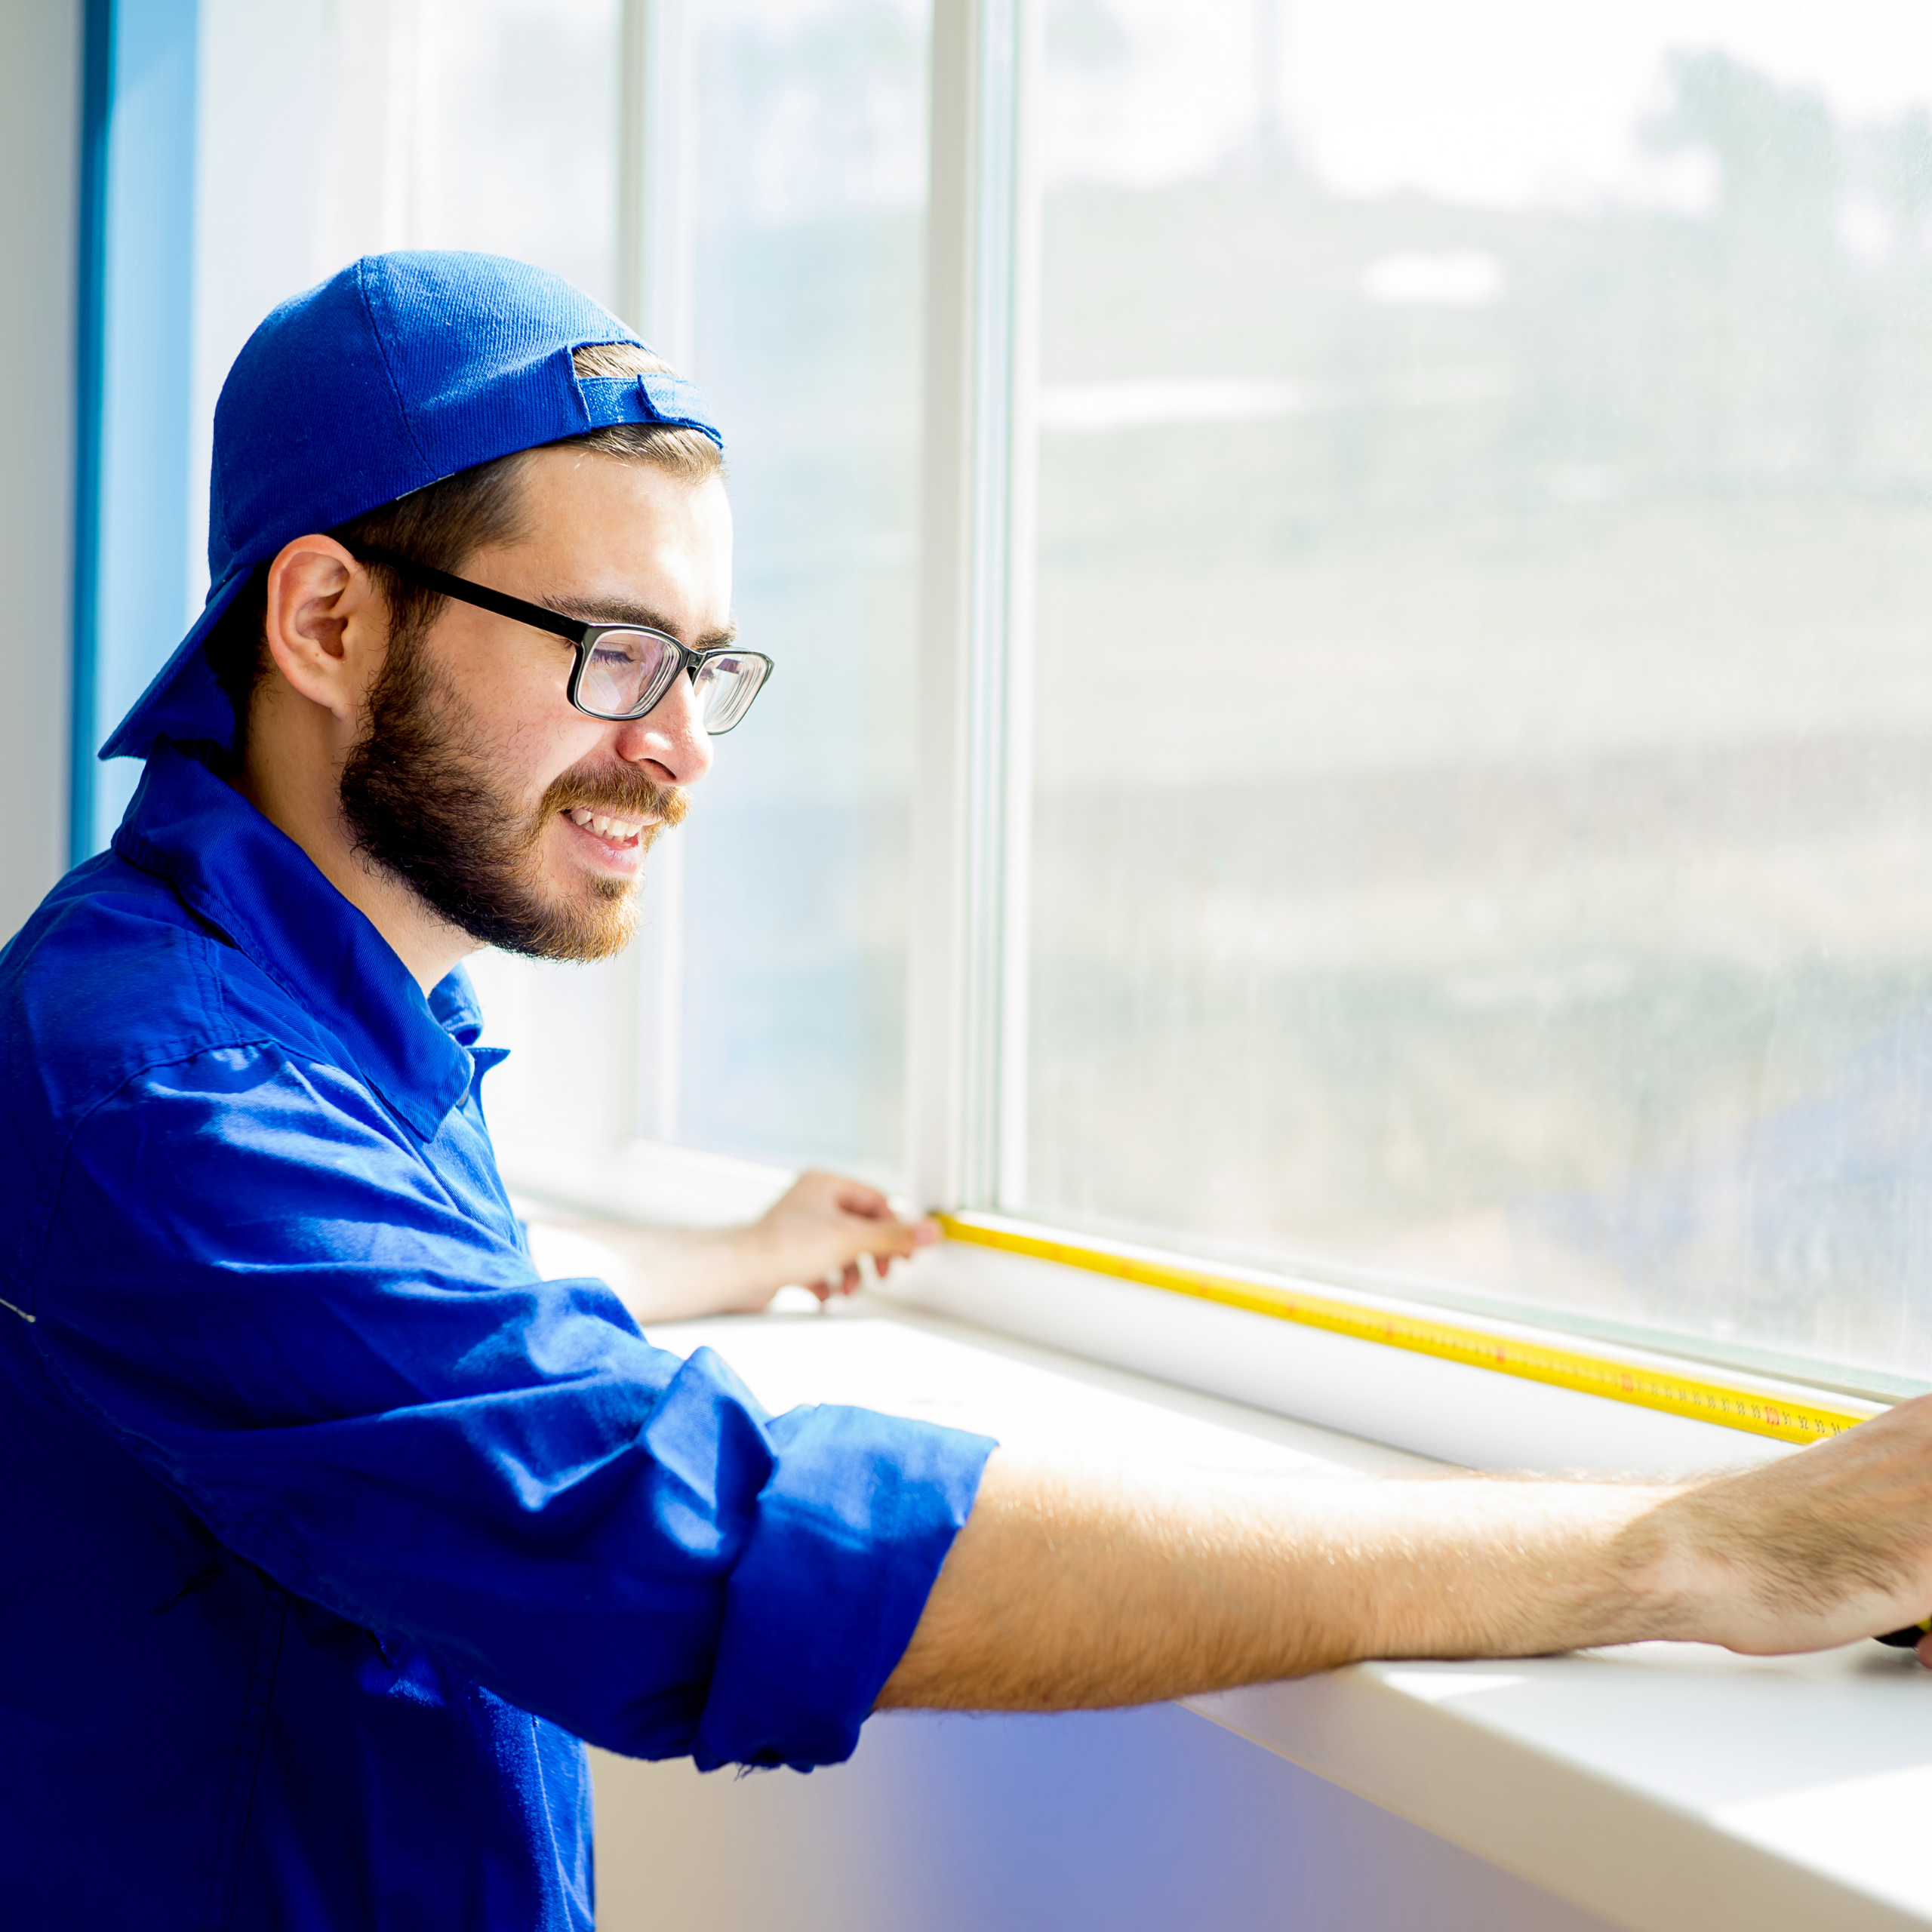 Man in blue measures window